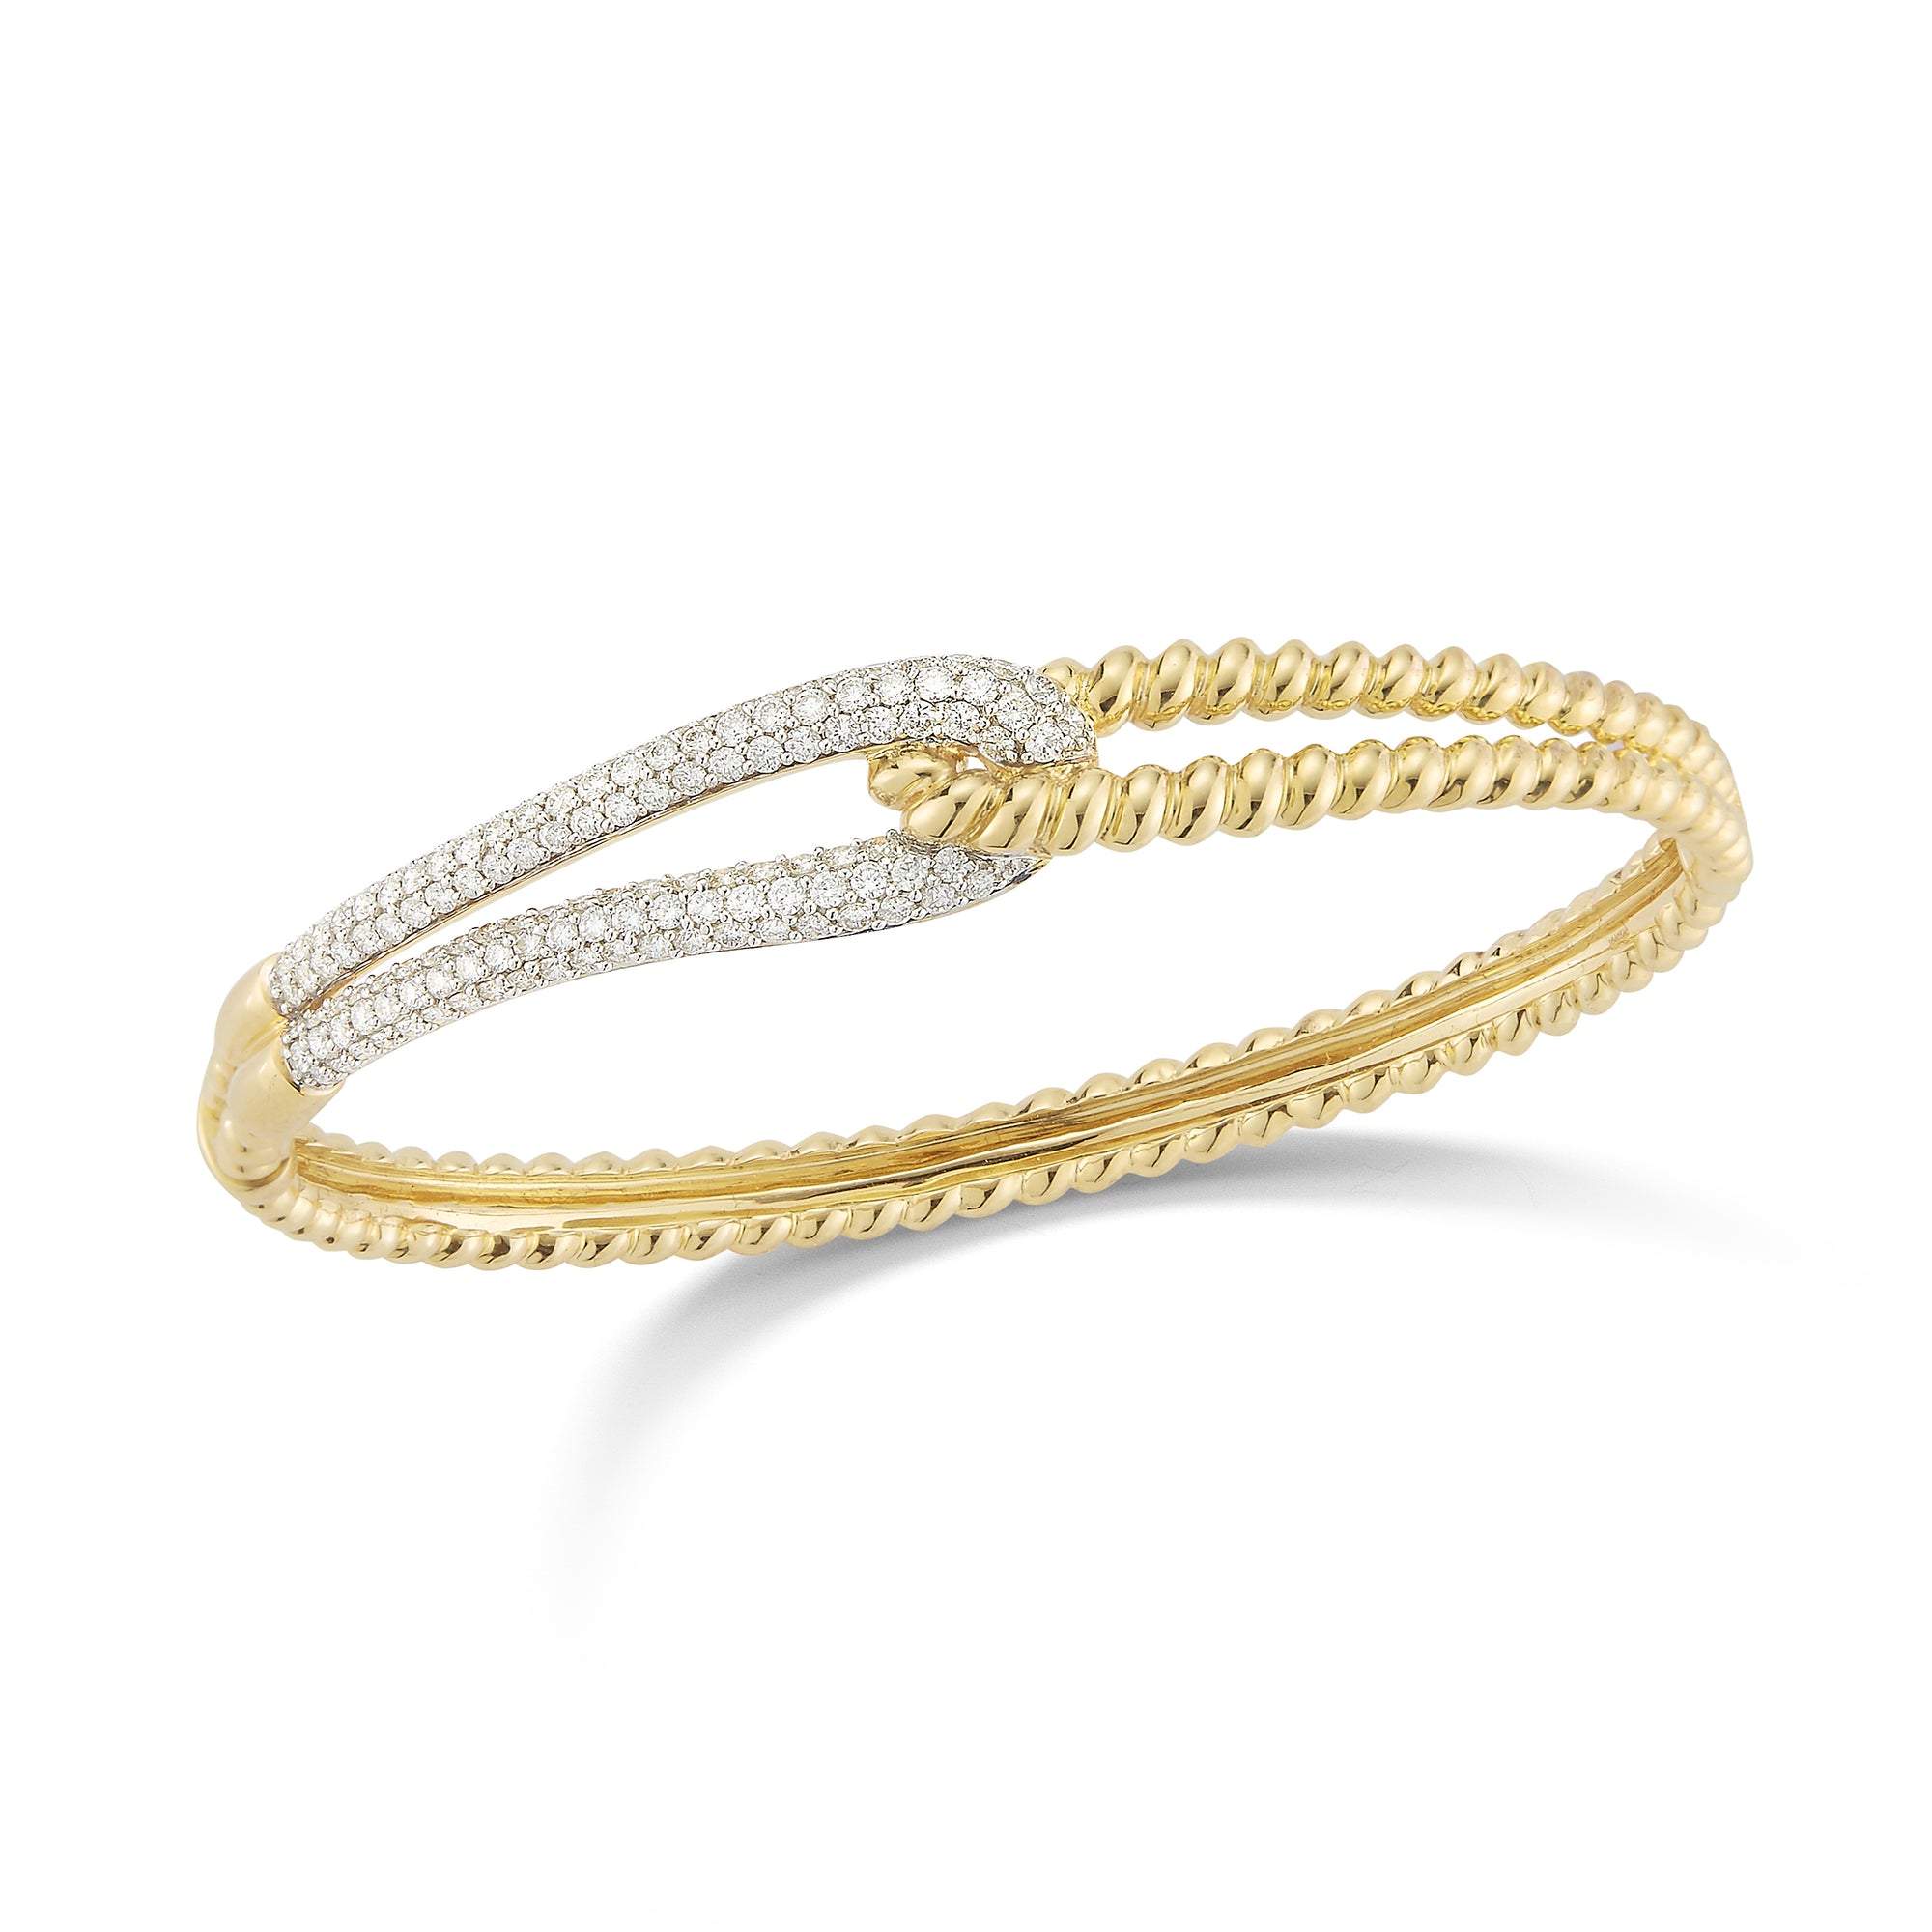 Large Diamond Linked Rope Bangle Bracelet -18k yellow gold weighing 21.73 grams -136 round pave-set diamonds totaling 1.48 carats